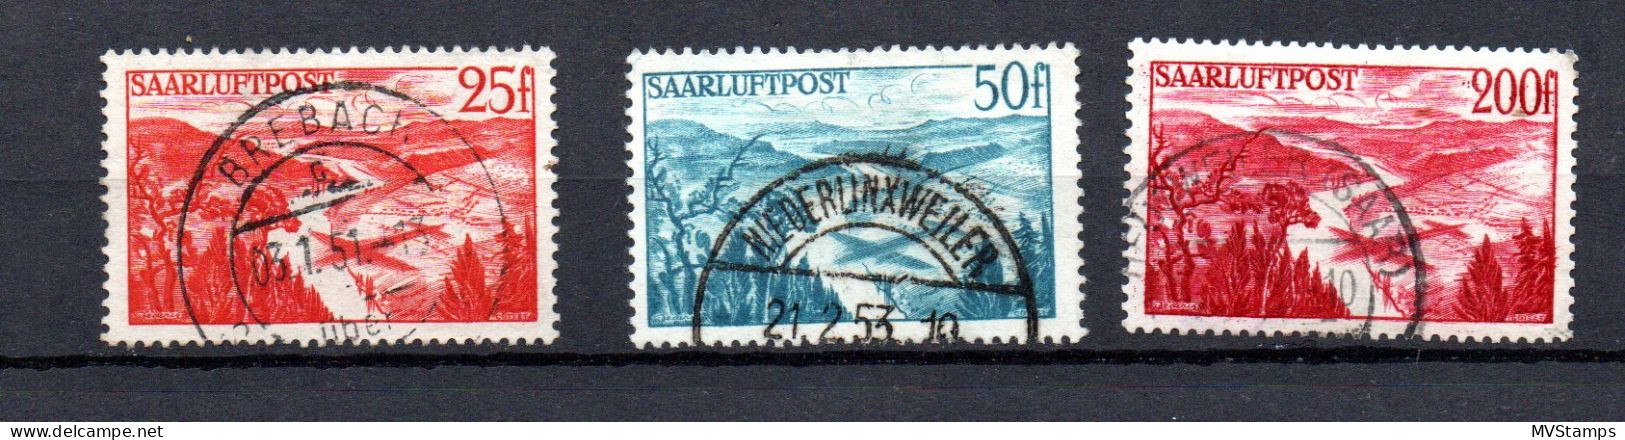 Saar/Germany 1948 Old Set Airmail Stamps (Michel 252/54) Nice Used - Aéreo